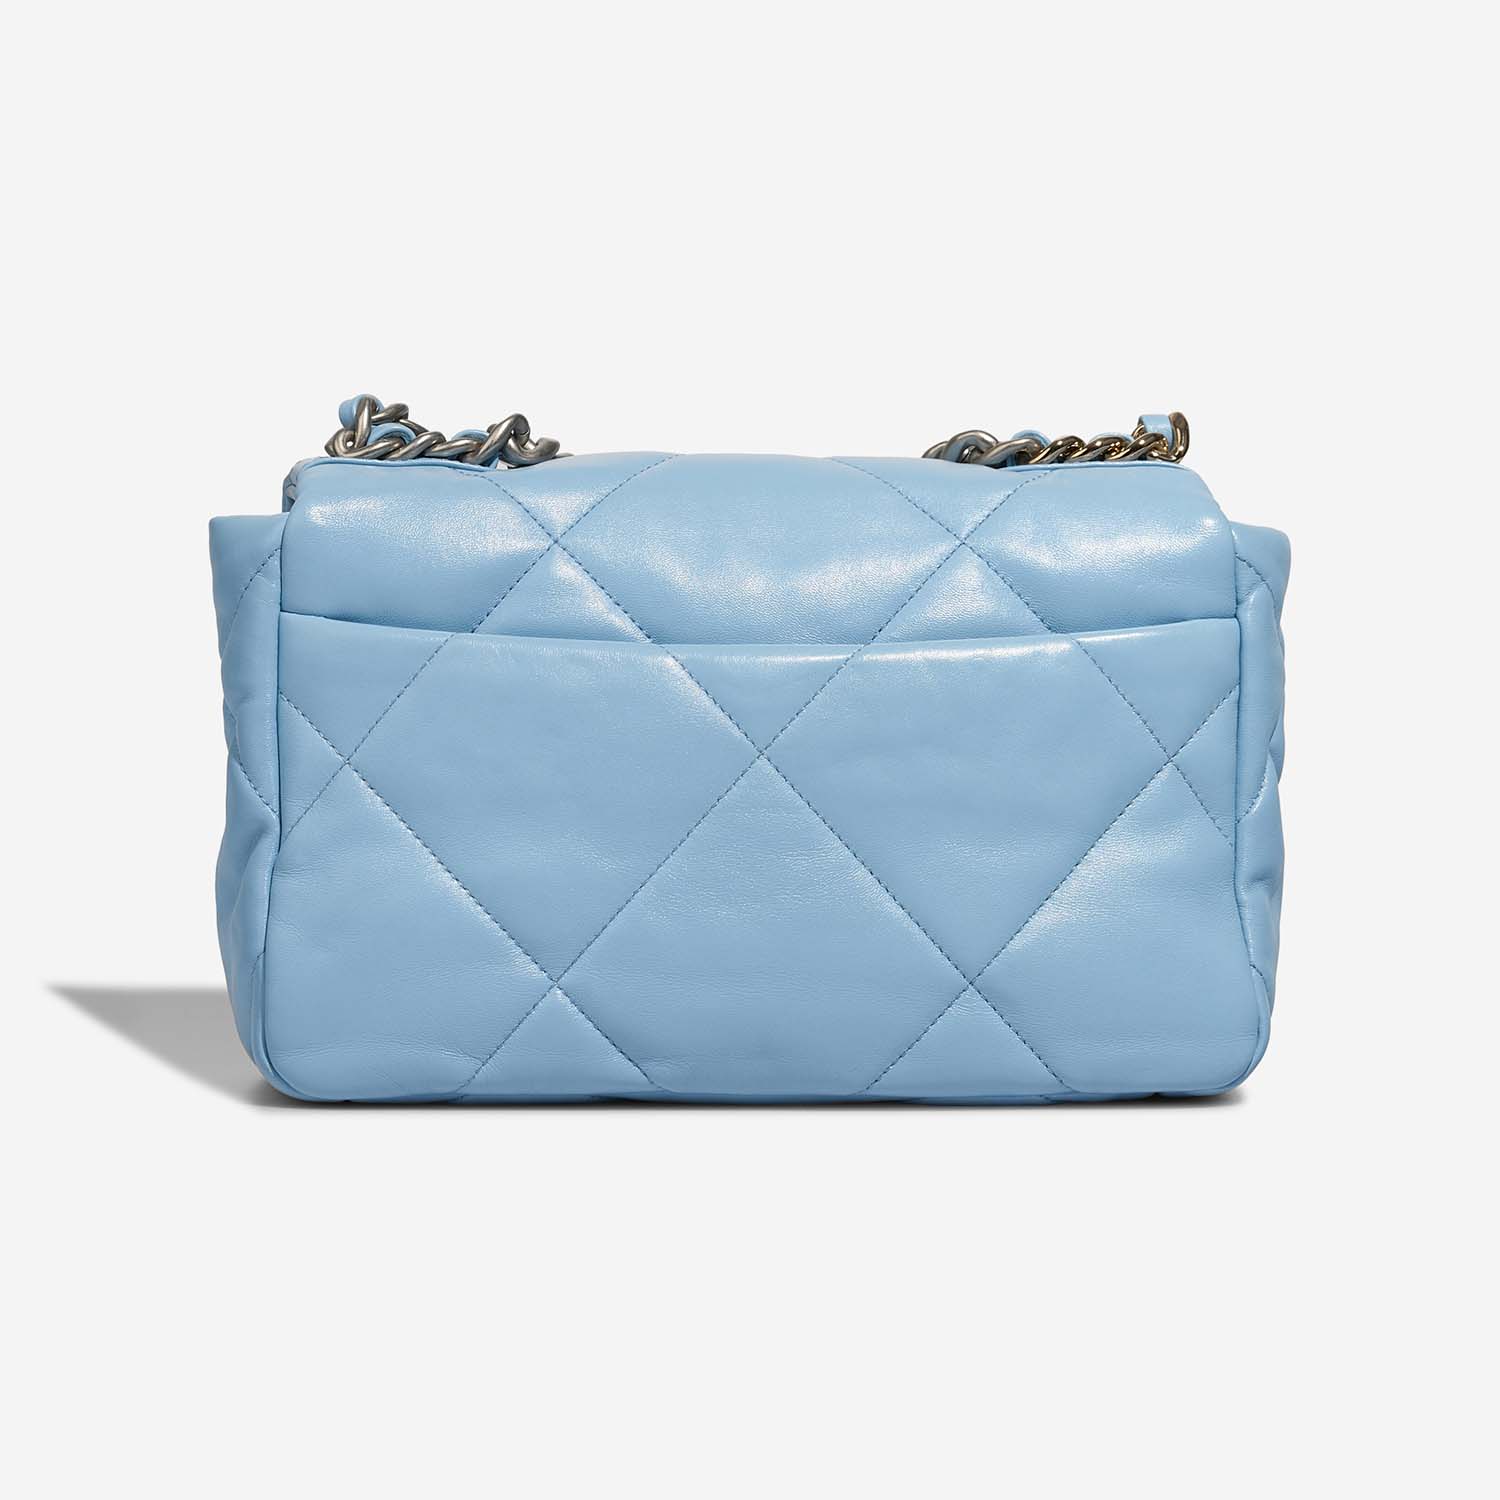 Chanel 19 Flapbag Lightblue Back | Sell your designer bag on Saclab.com